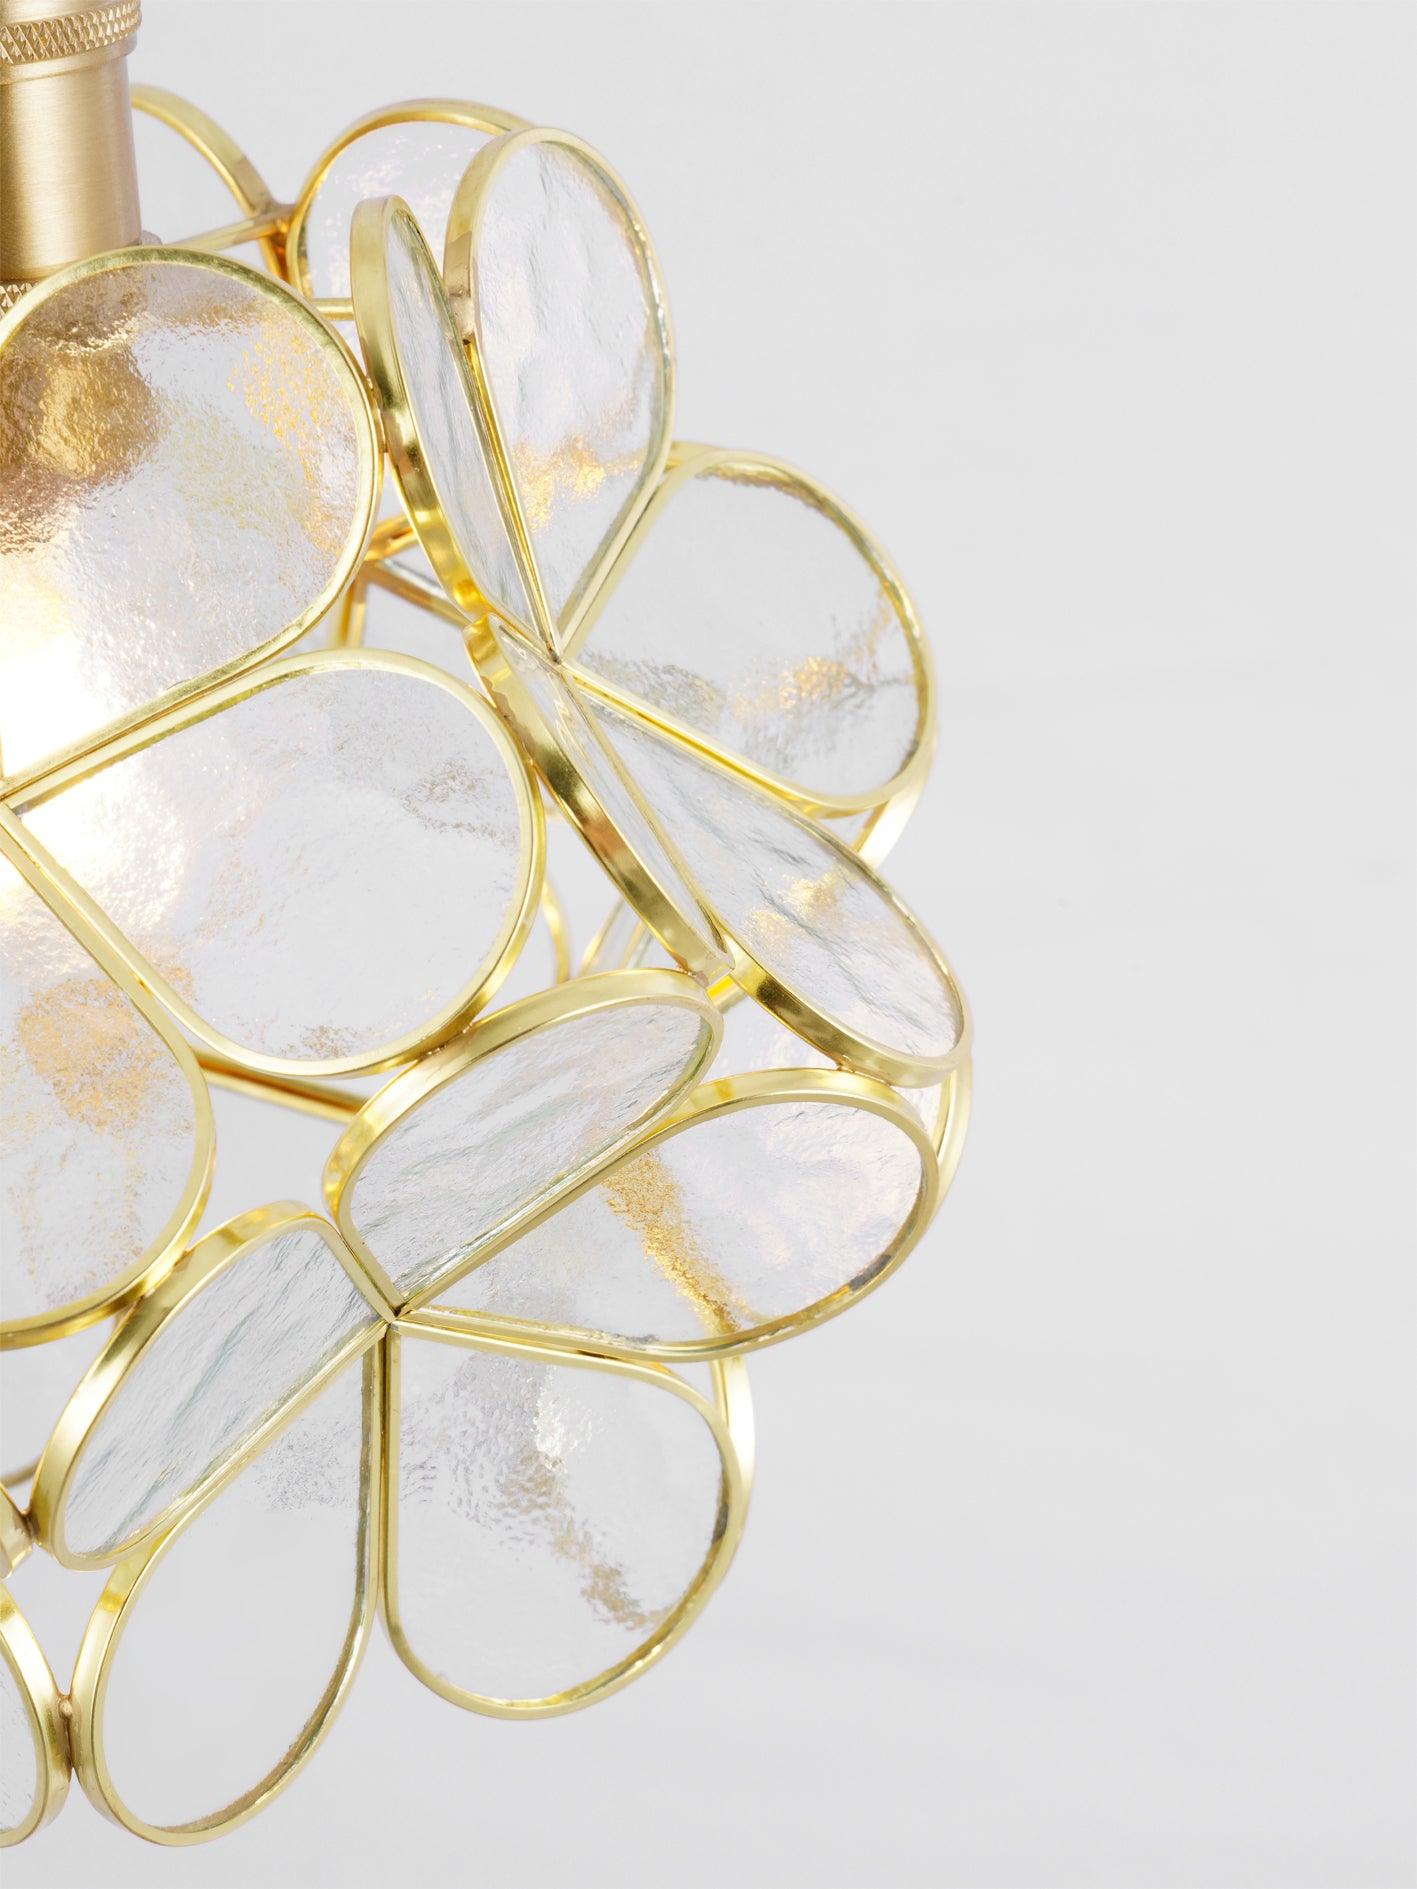 Glass Petal Pendant Light with Brass